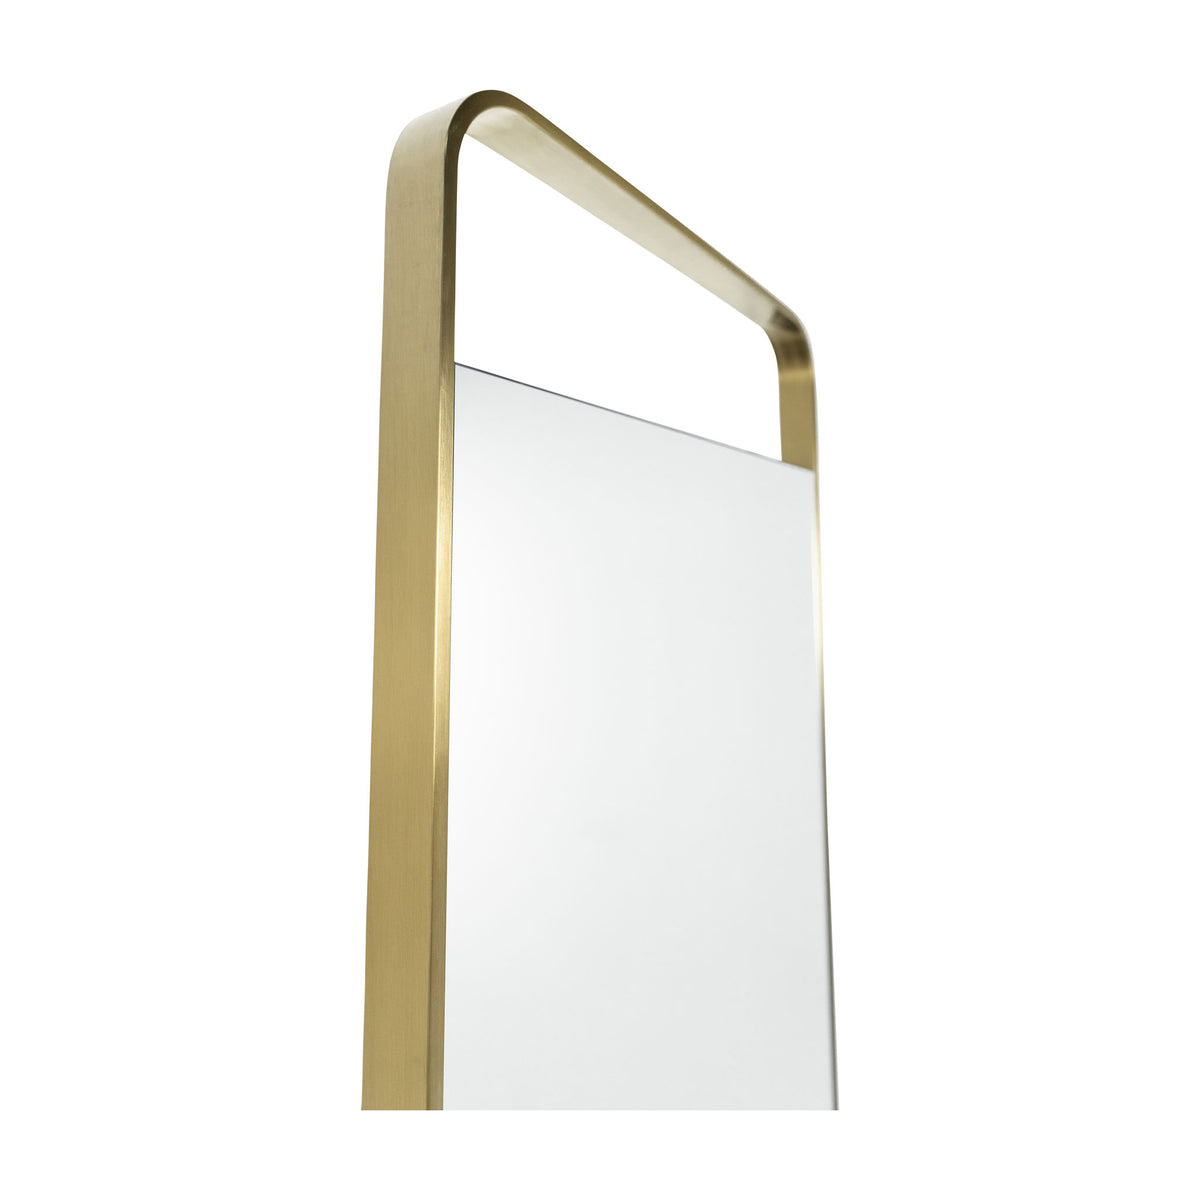 Lyon Brushed Brass Metal Bathroom Mirror - 550mm w x 1000mm h with shelf